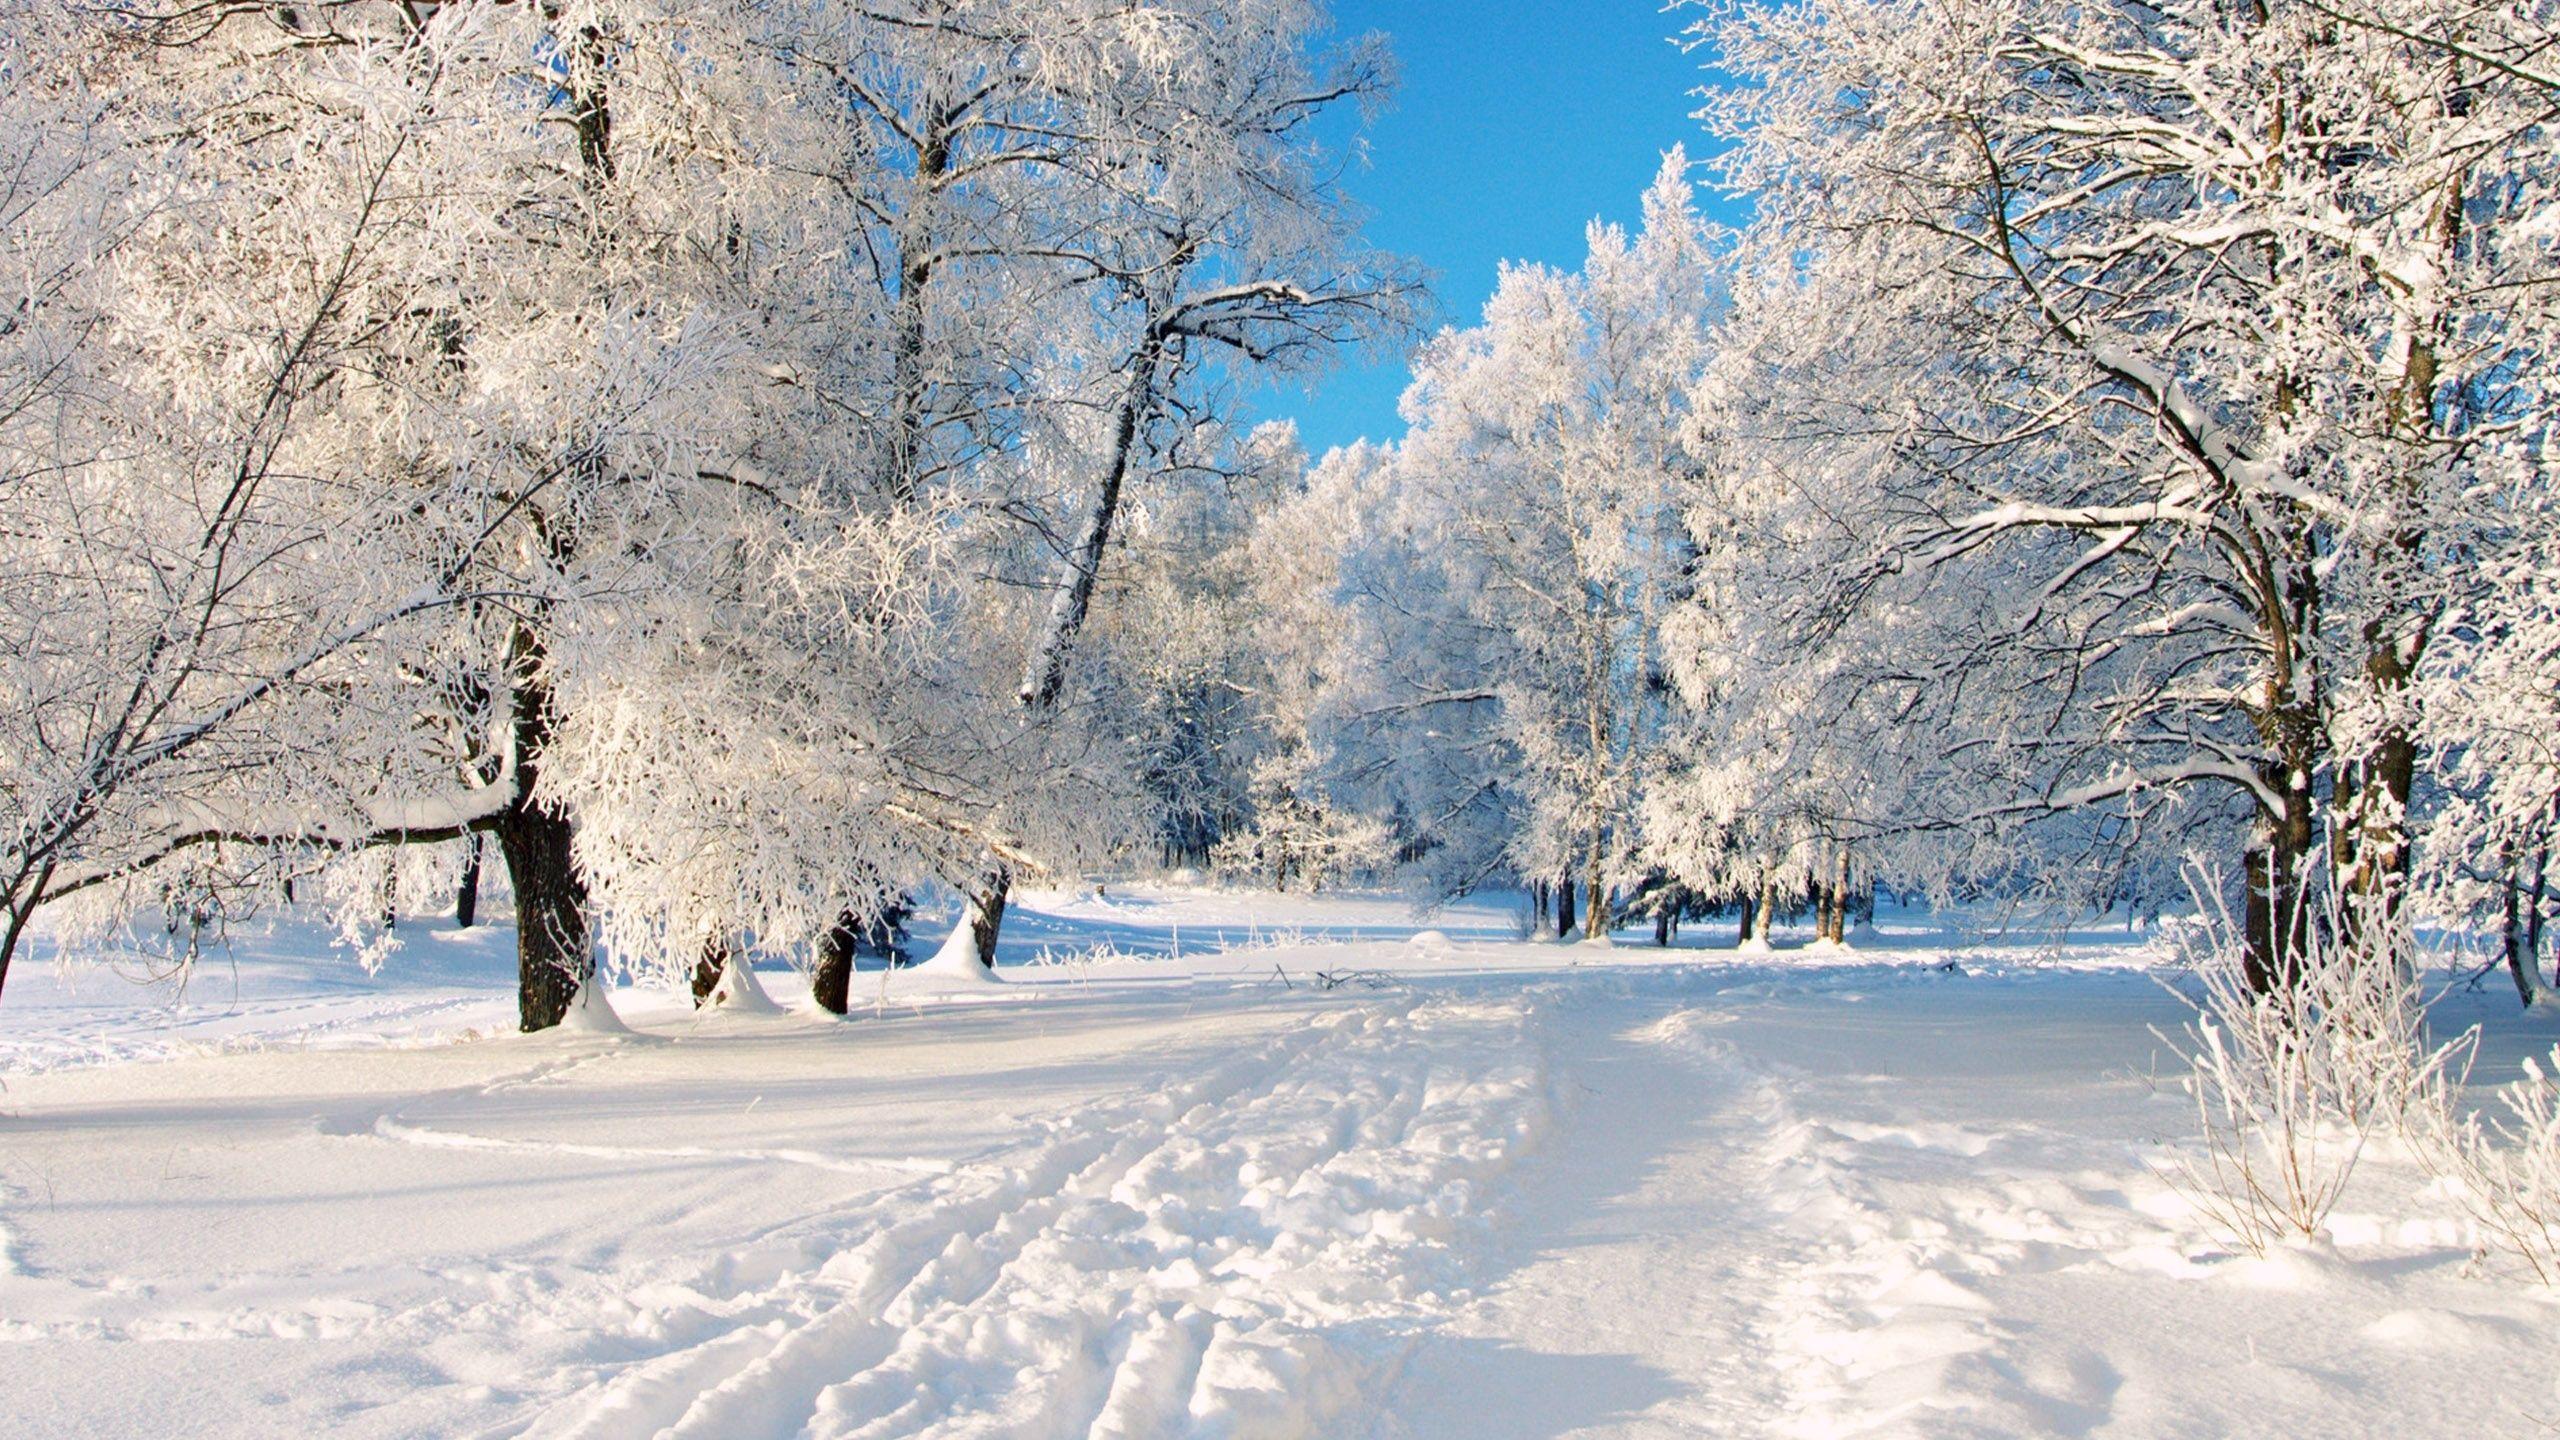 A Dreamy Winter Scenery Desktop Wallpaper And. 겨울 배경, 겨울 배경화면, 자연 사진